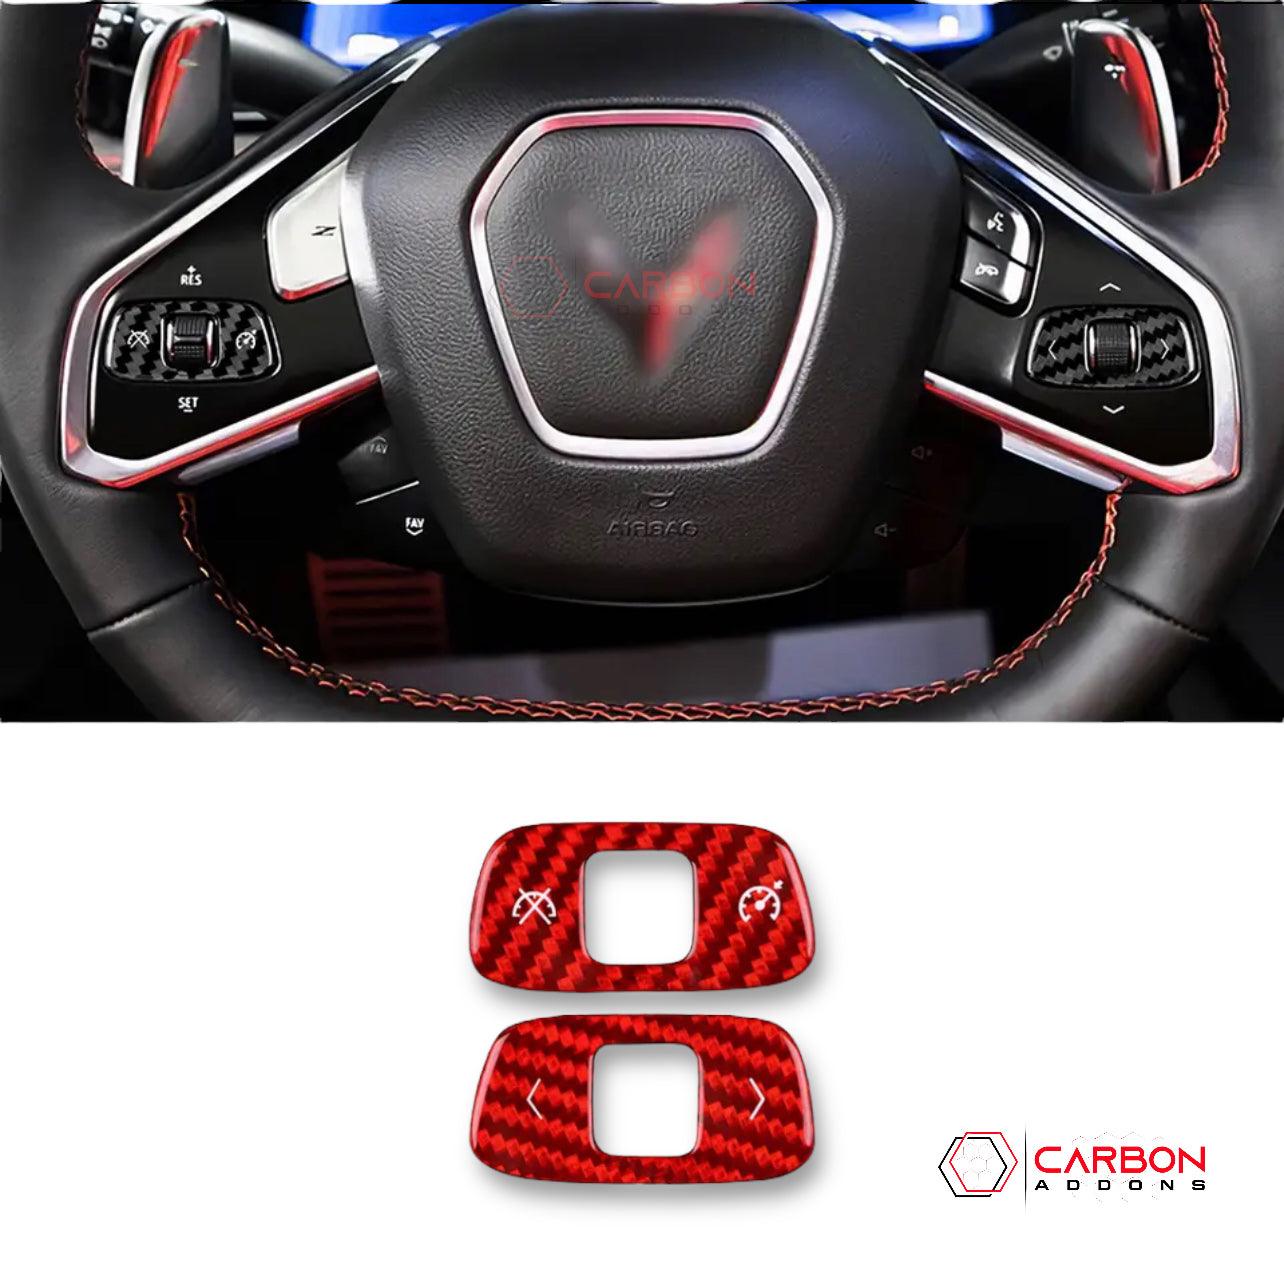 [2pcs] C8 Corvette Carbon Fiber Steering Wheel Roller Control Trim Cover - carbonaddons Carbon Fiber Parts, Accessories, Upgrades, Mods